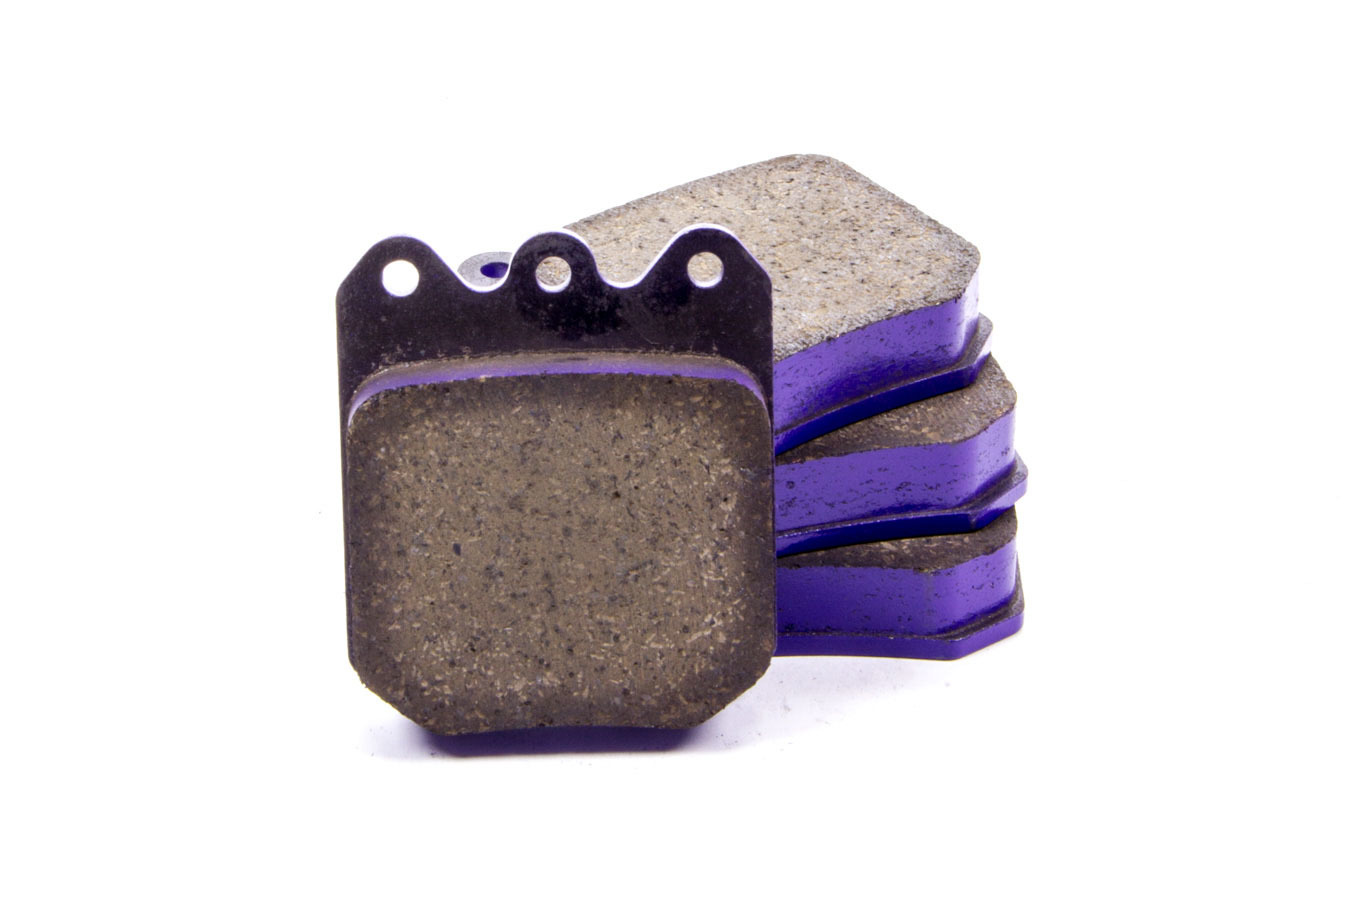 Brake Pads - Purple Compound - Moderate Friction - Medium Temperature - Sprint Car / Aluminum Rotors - Dynalite / Dynapro - Kit